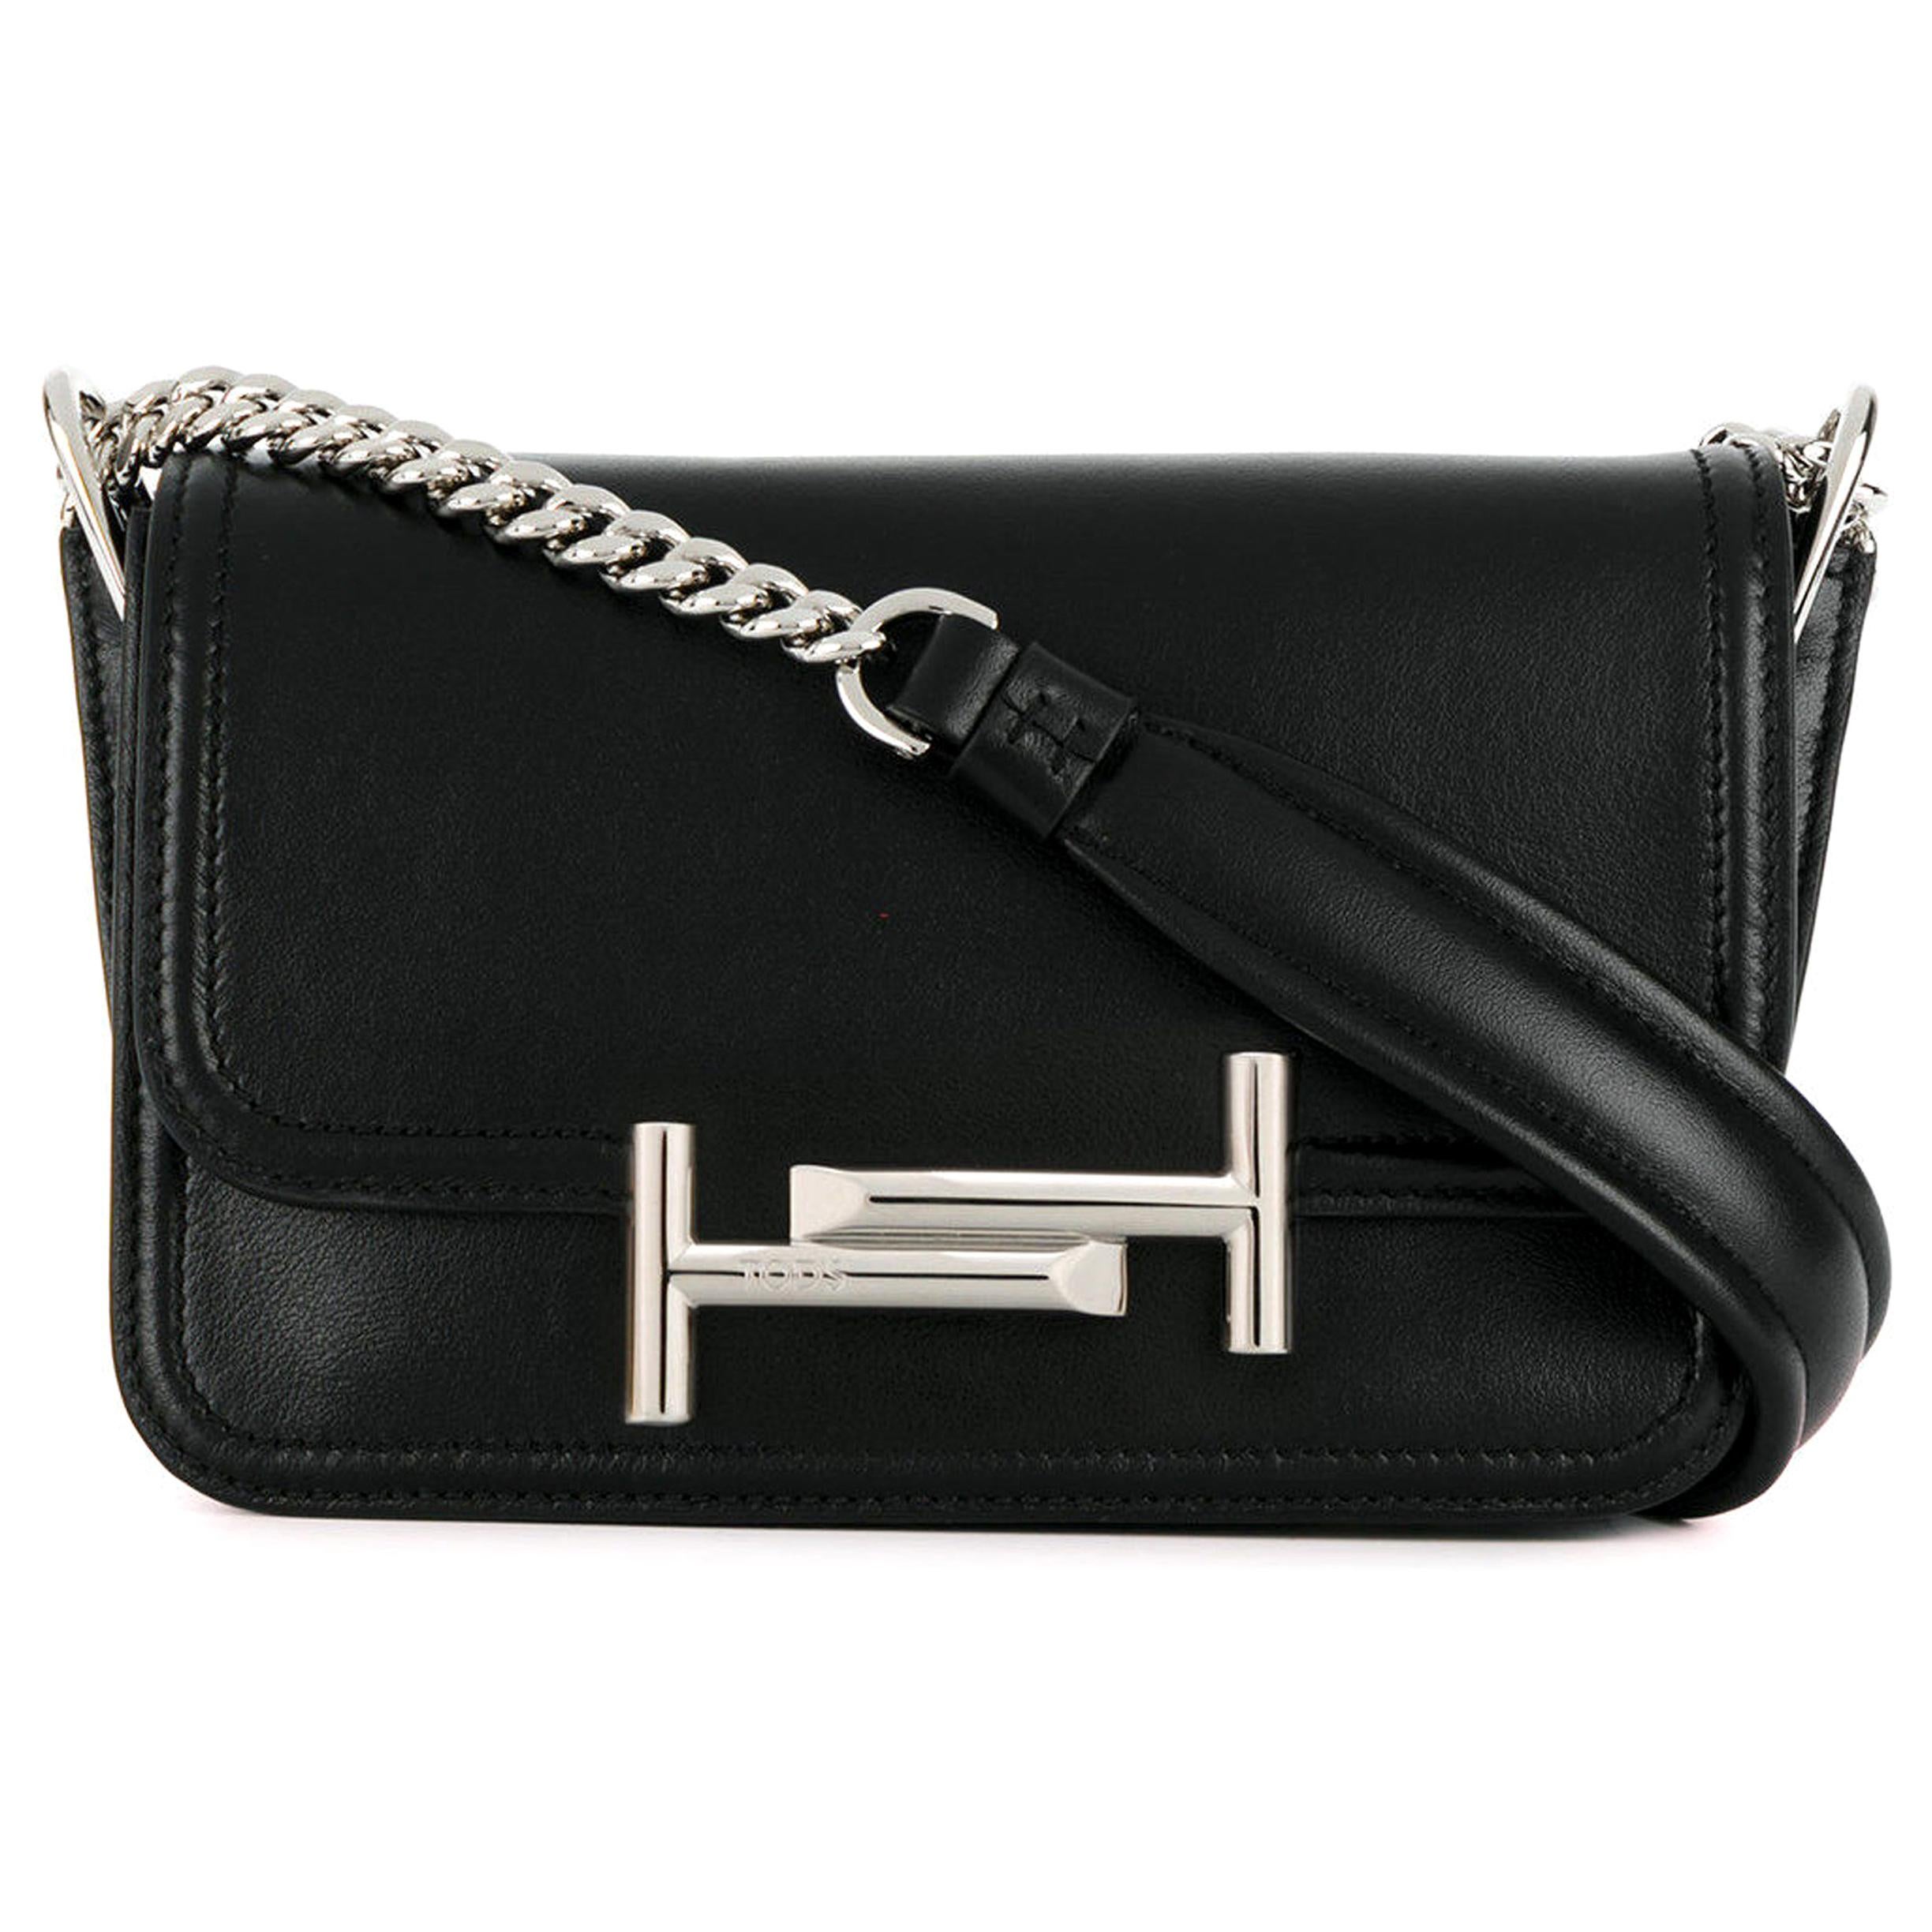 Tods Handbags - 28 For Sale on 1stDibs | tods bag, tods d bag 